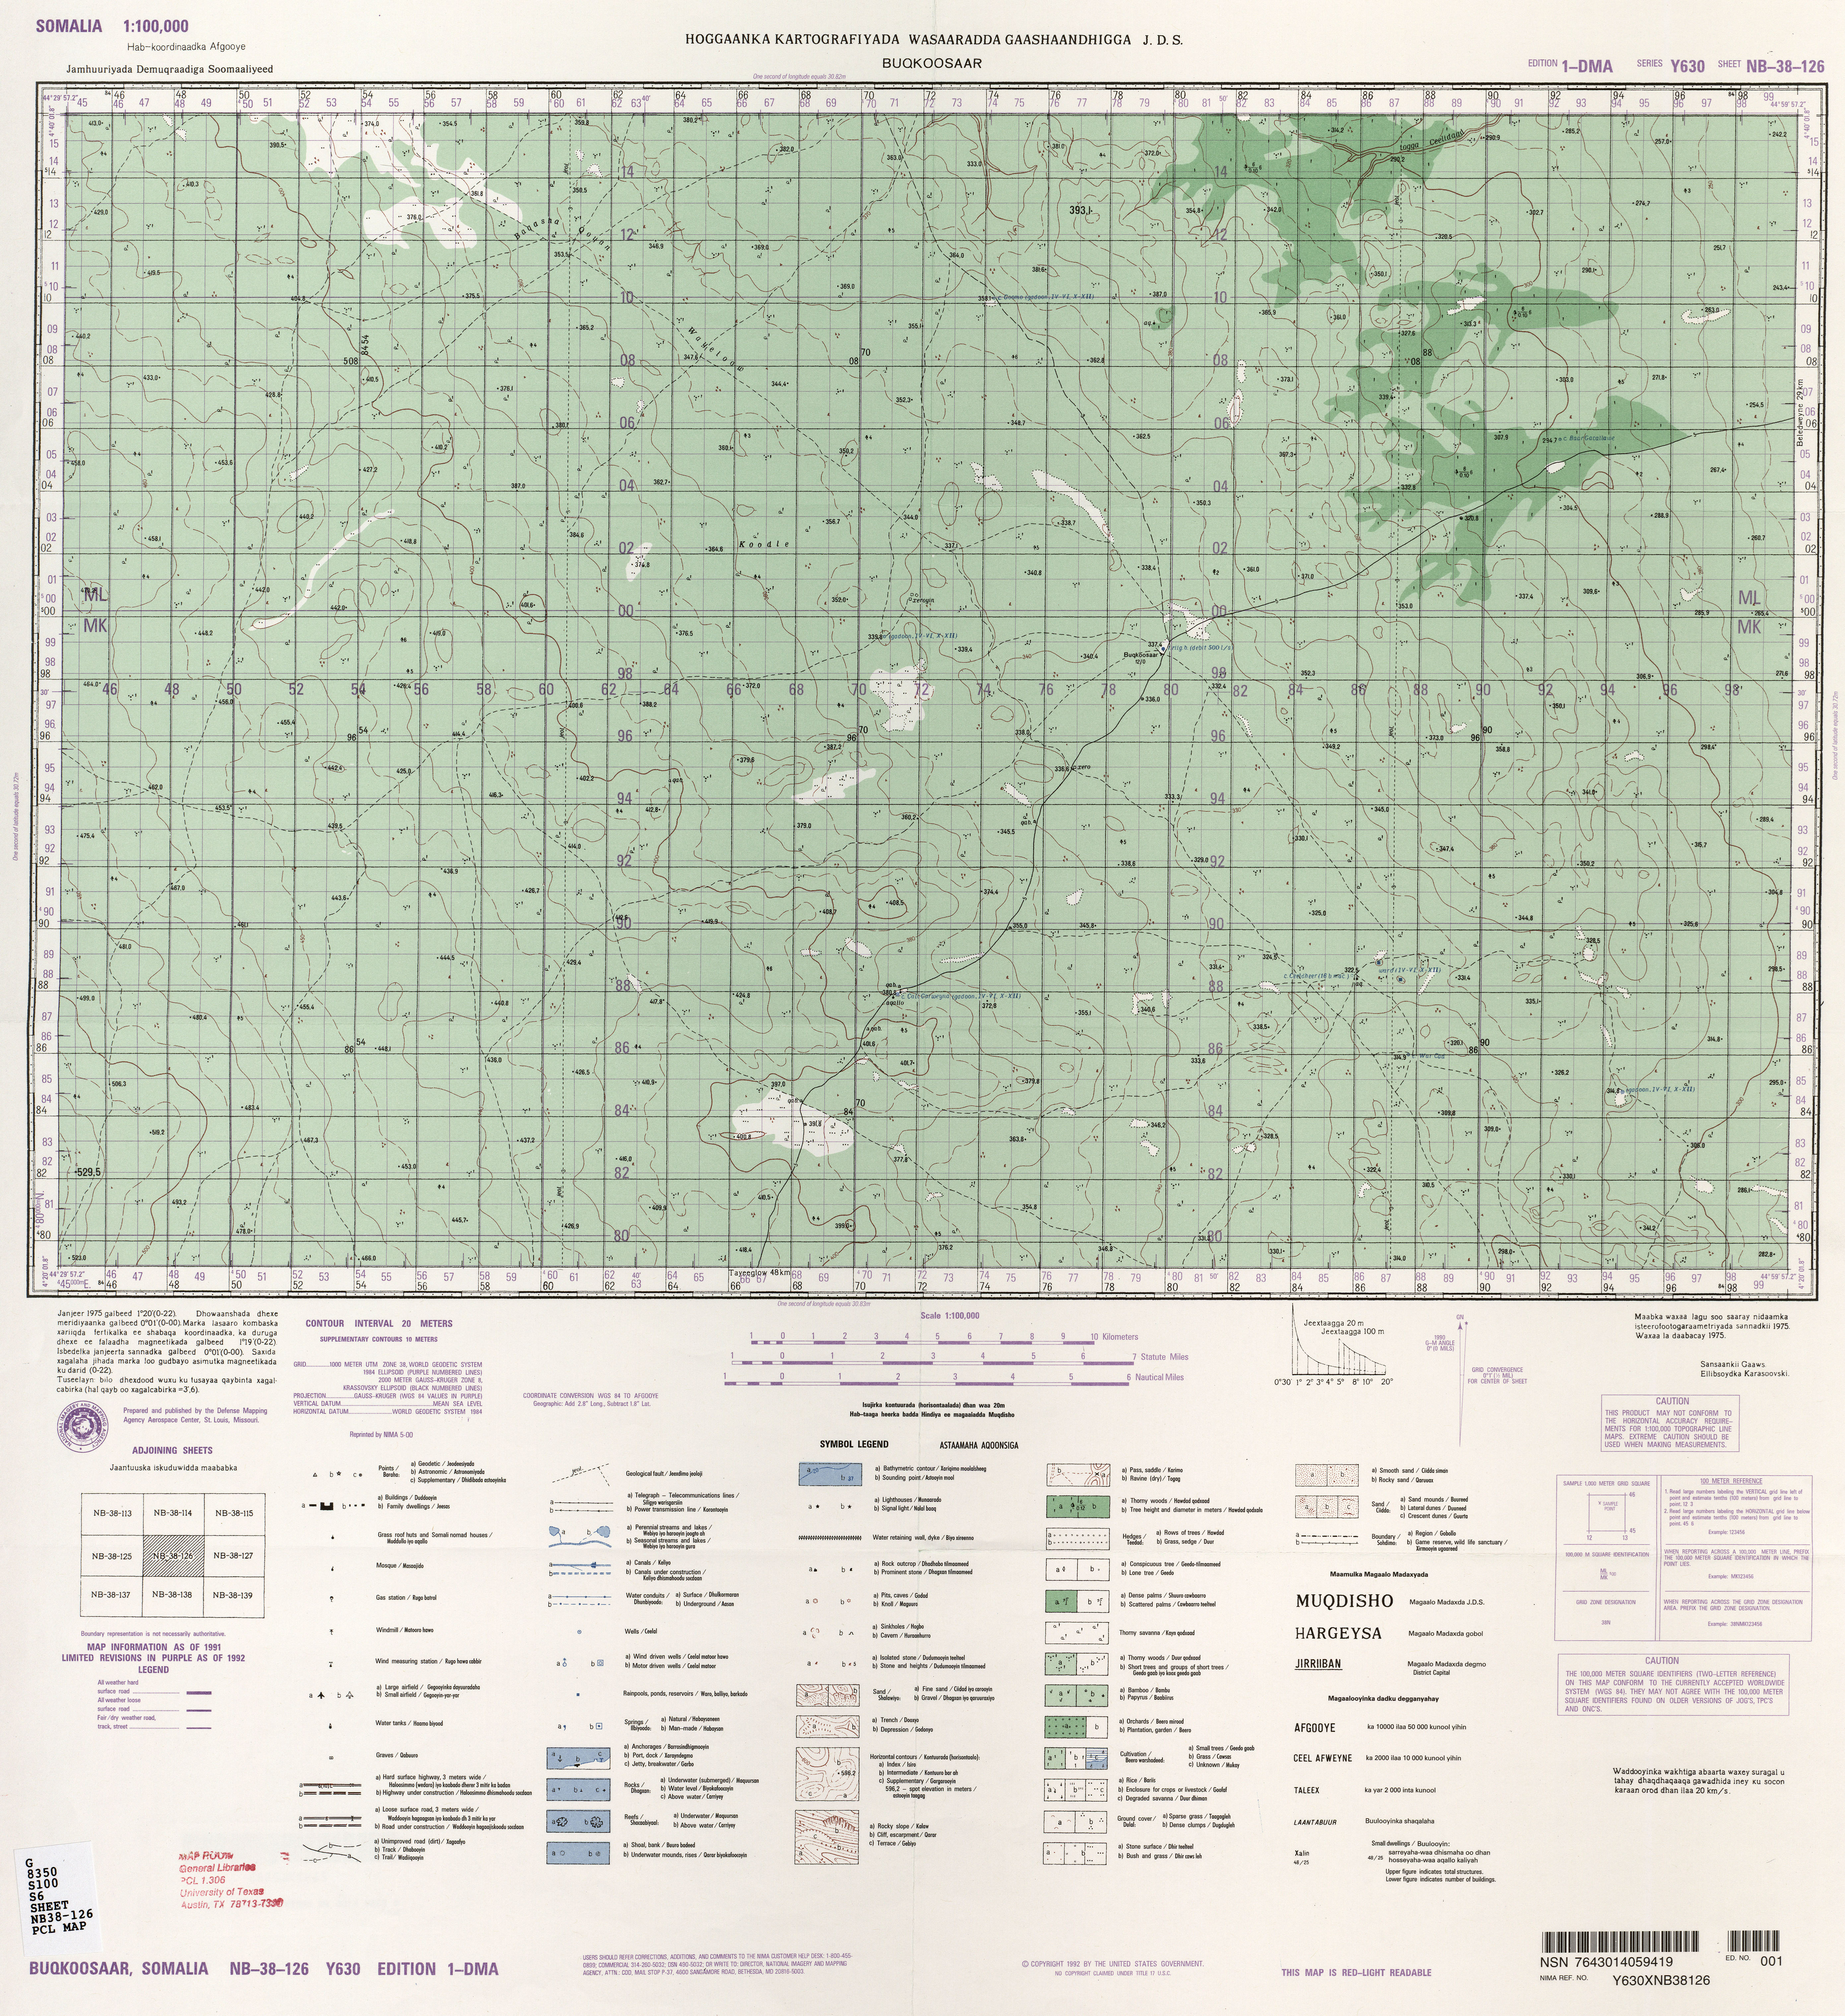 http://maps.lib.utexas.edu/maps/topo/somalia/txu-pclmaps-oclc-56953734-nb-38-126-buqkoosaar.jpg